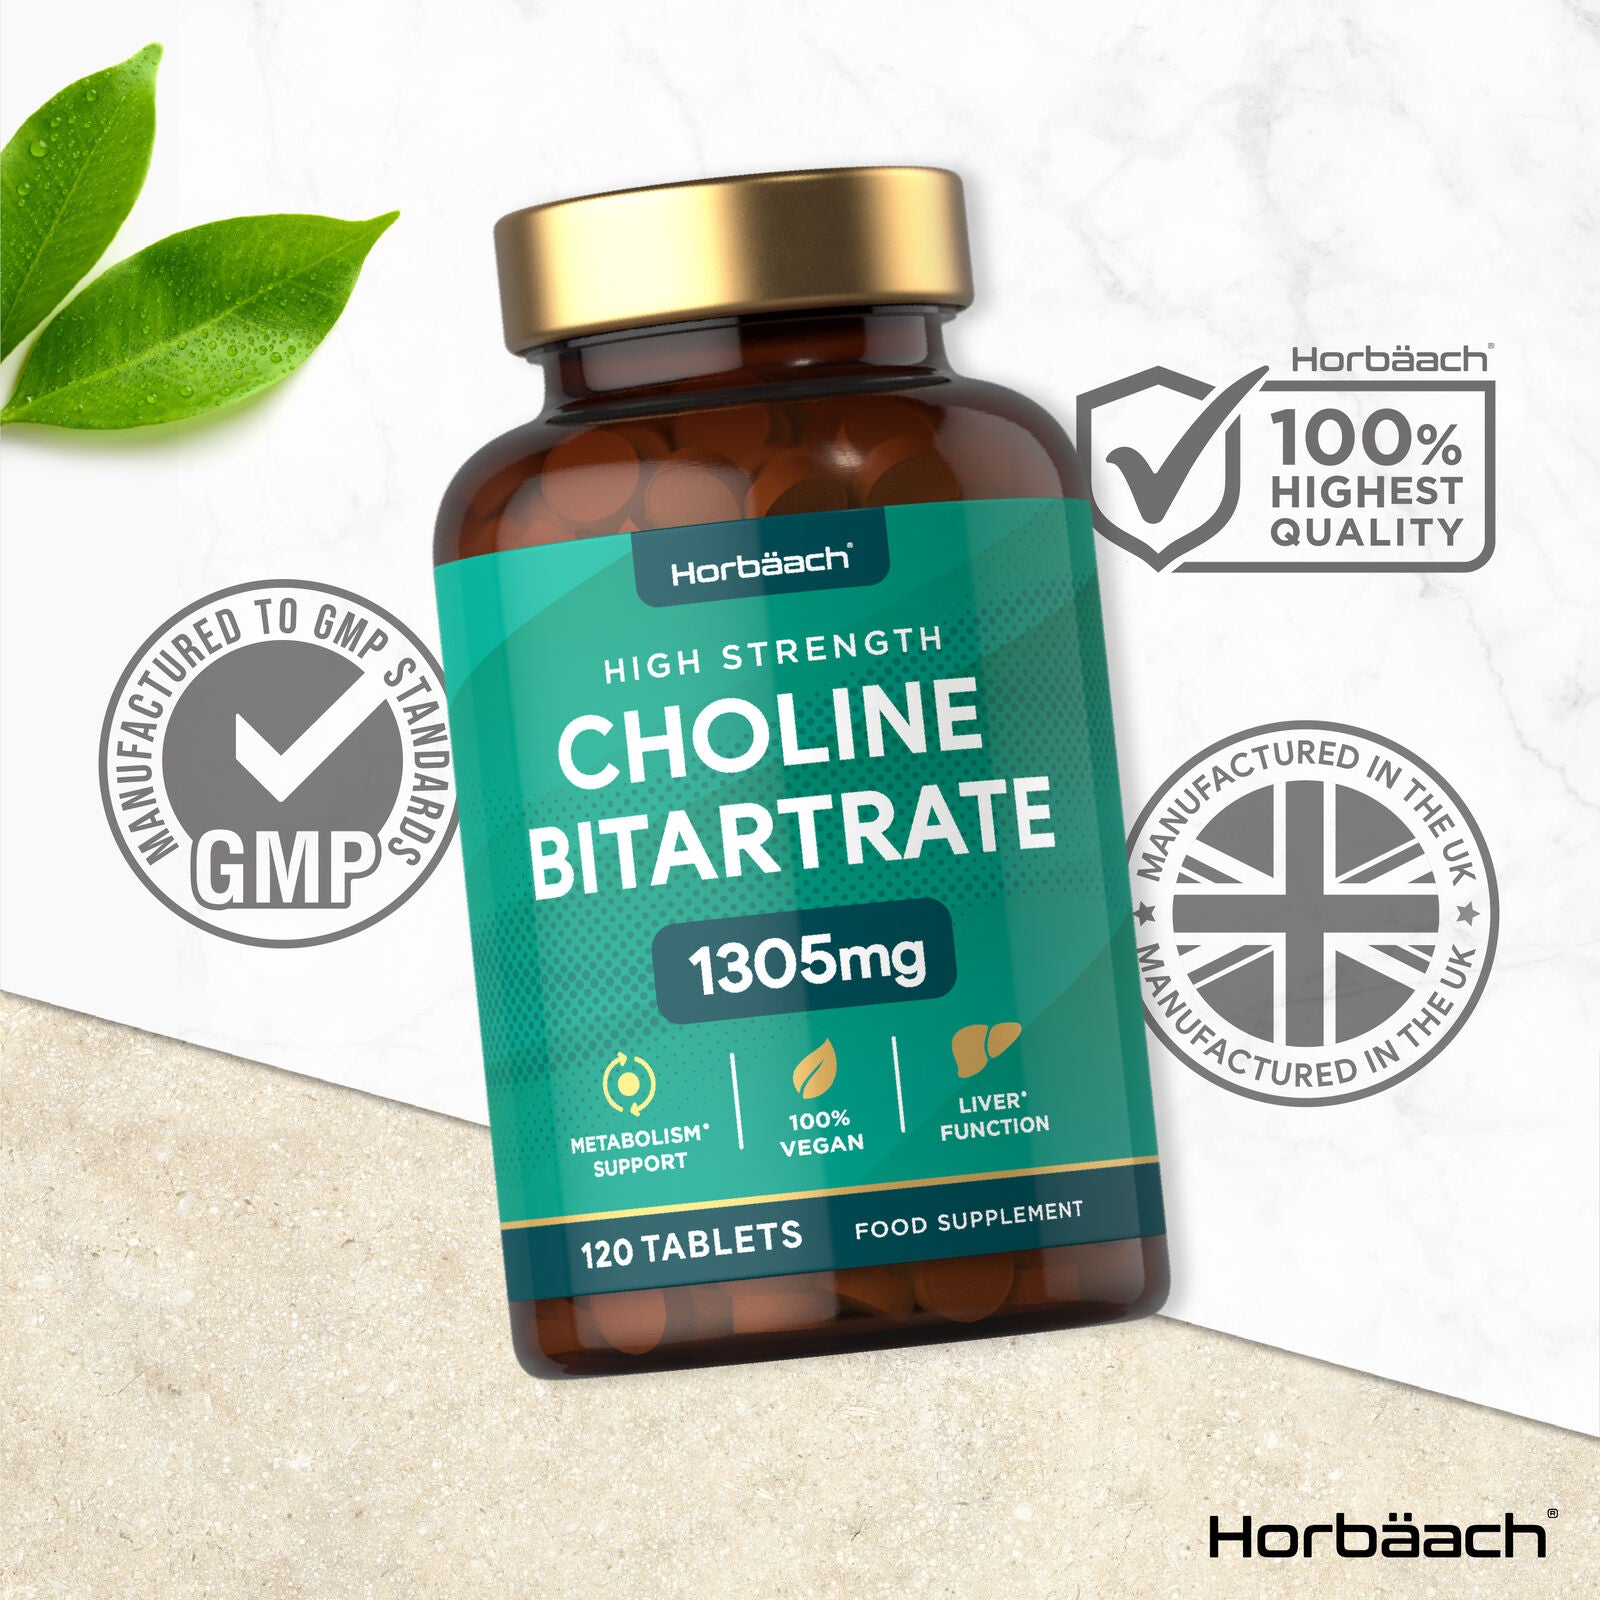 Choline Bitartrate 1305 mg | 120 Tablets